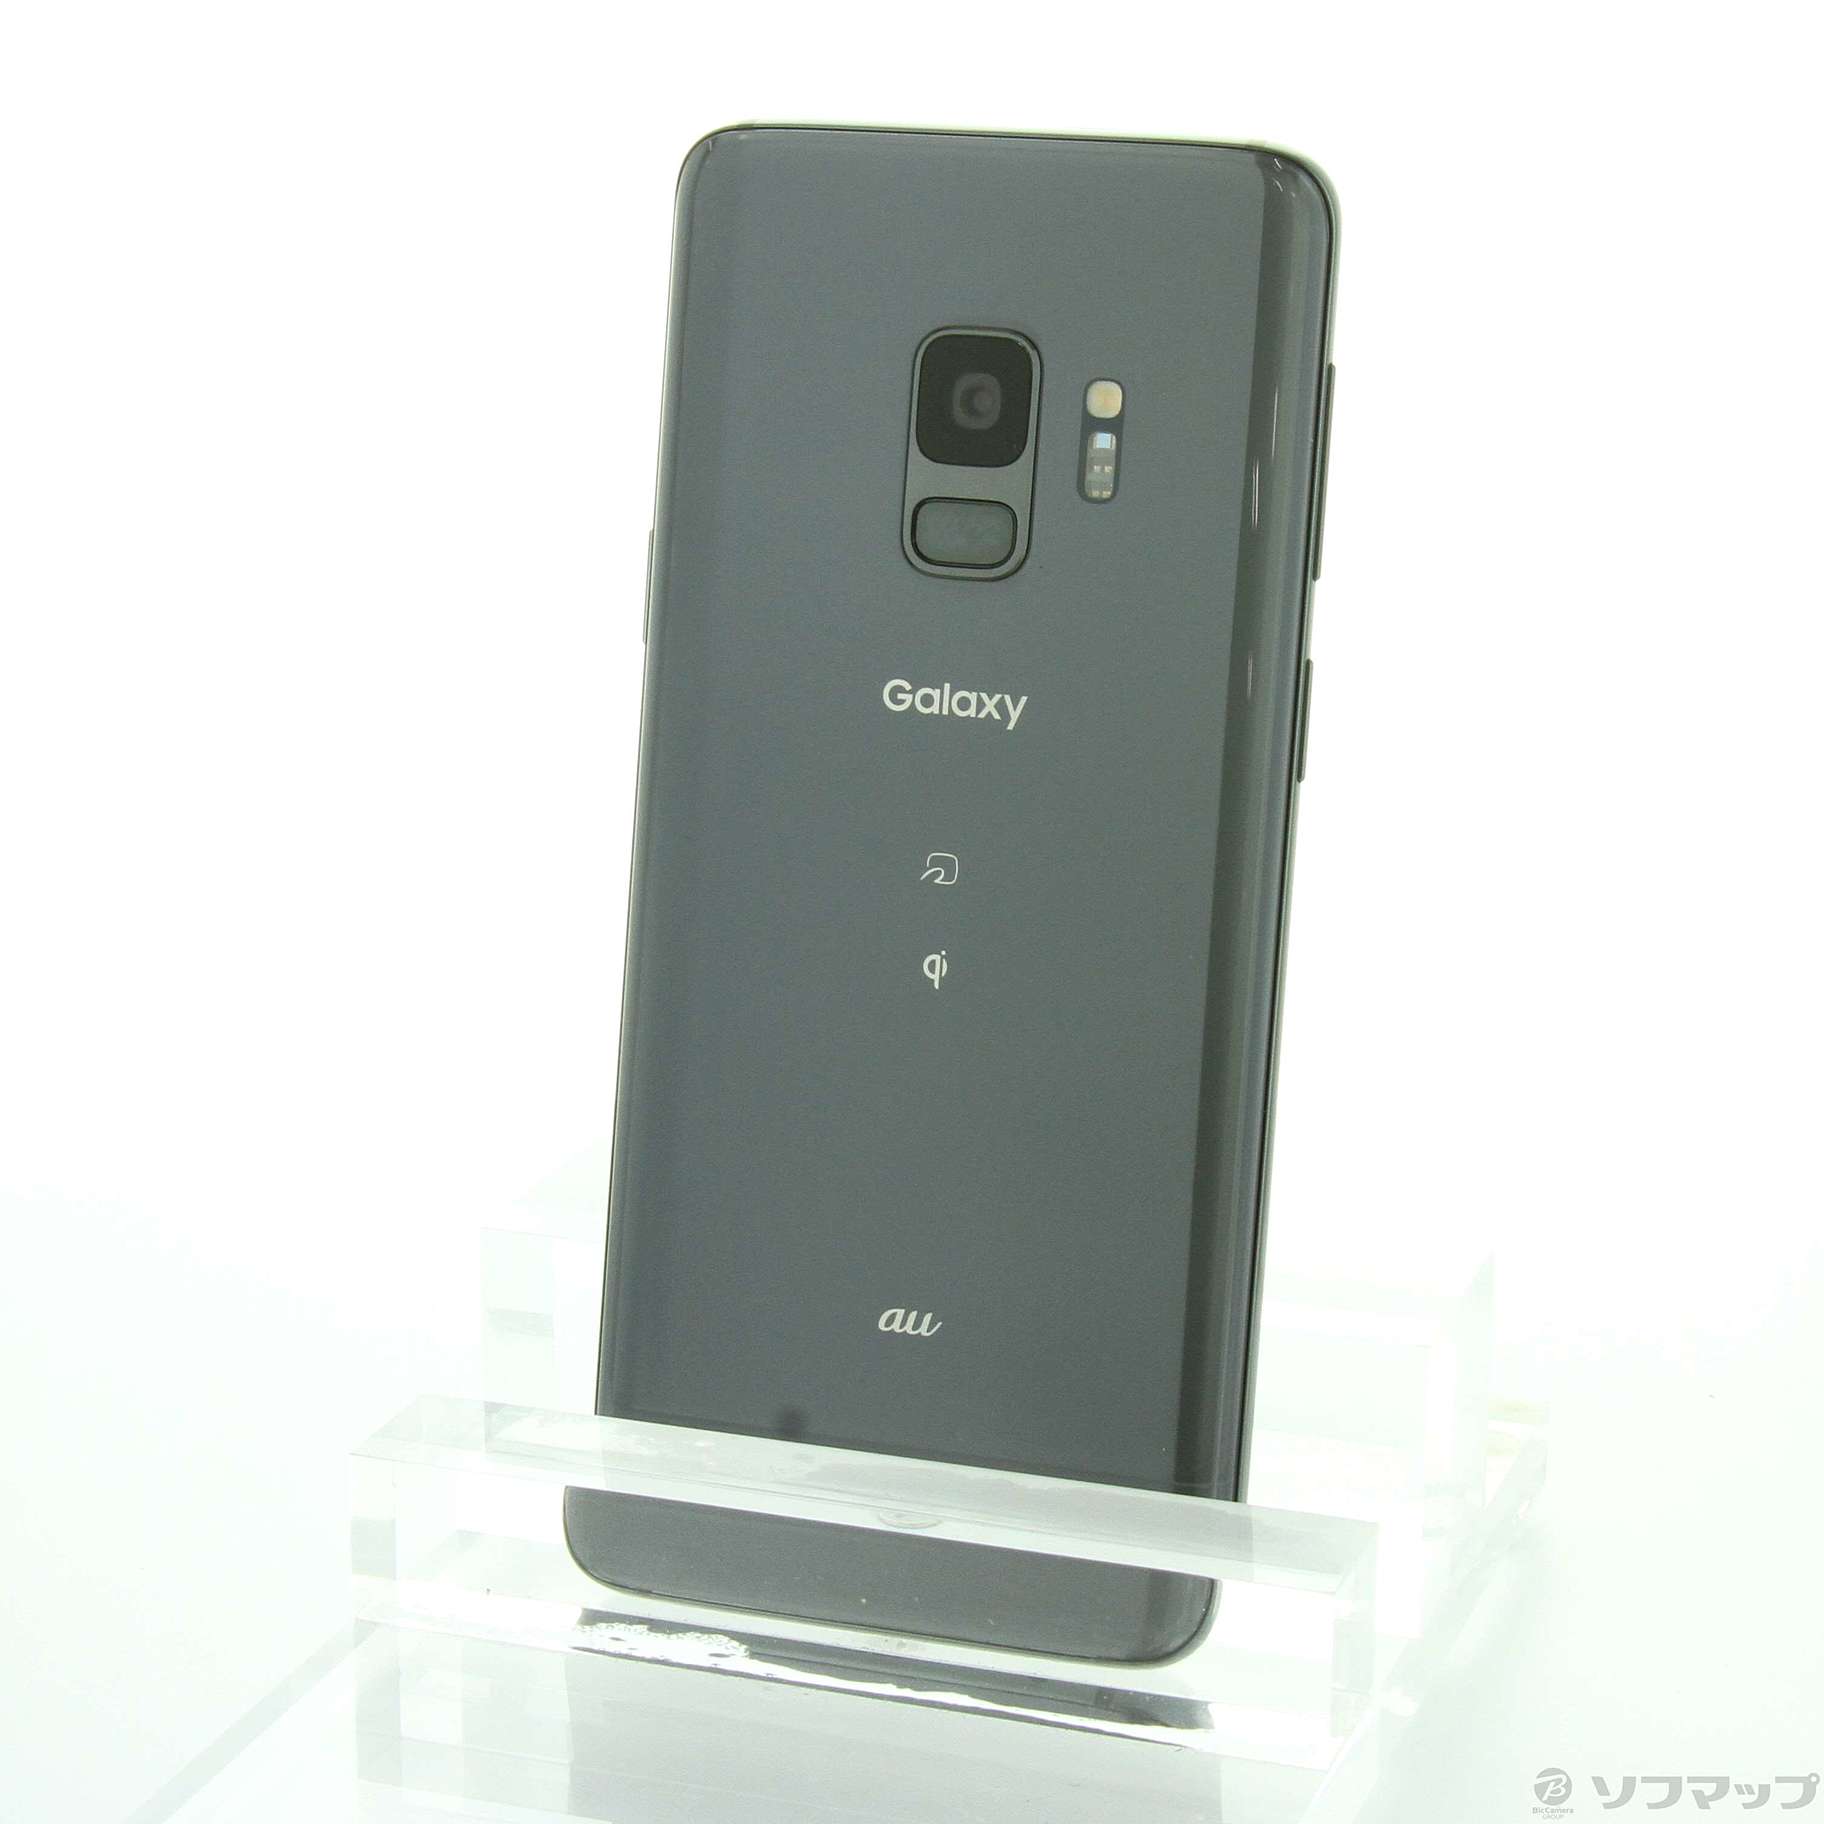 Galaxy S9 Titanium Gray 64 GB au